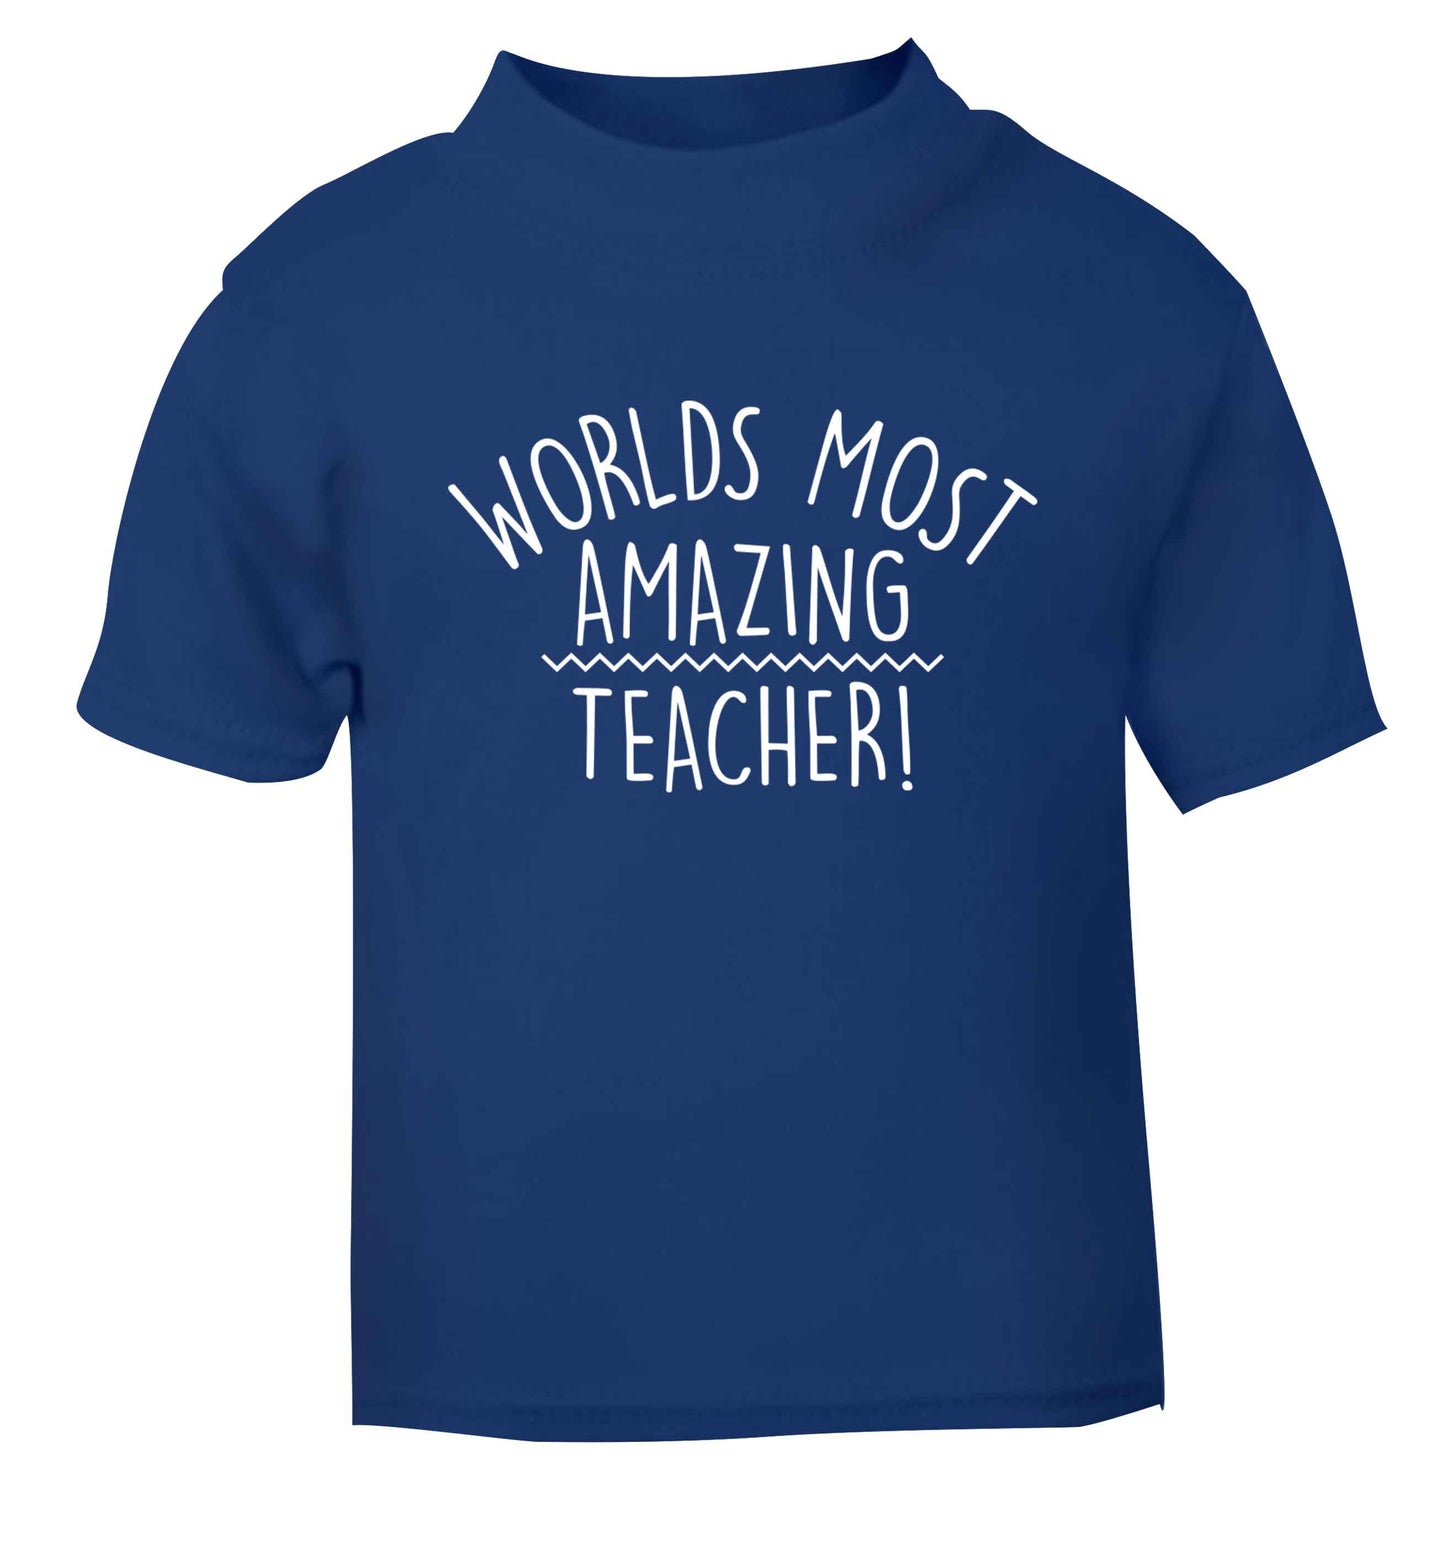 Worlds most amazing teacher blue baby toddler Tshirt 2 Years